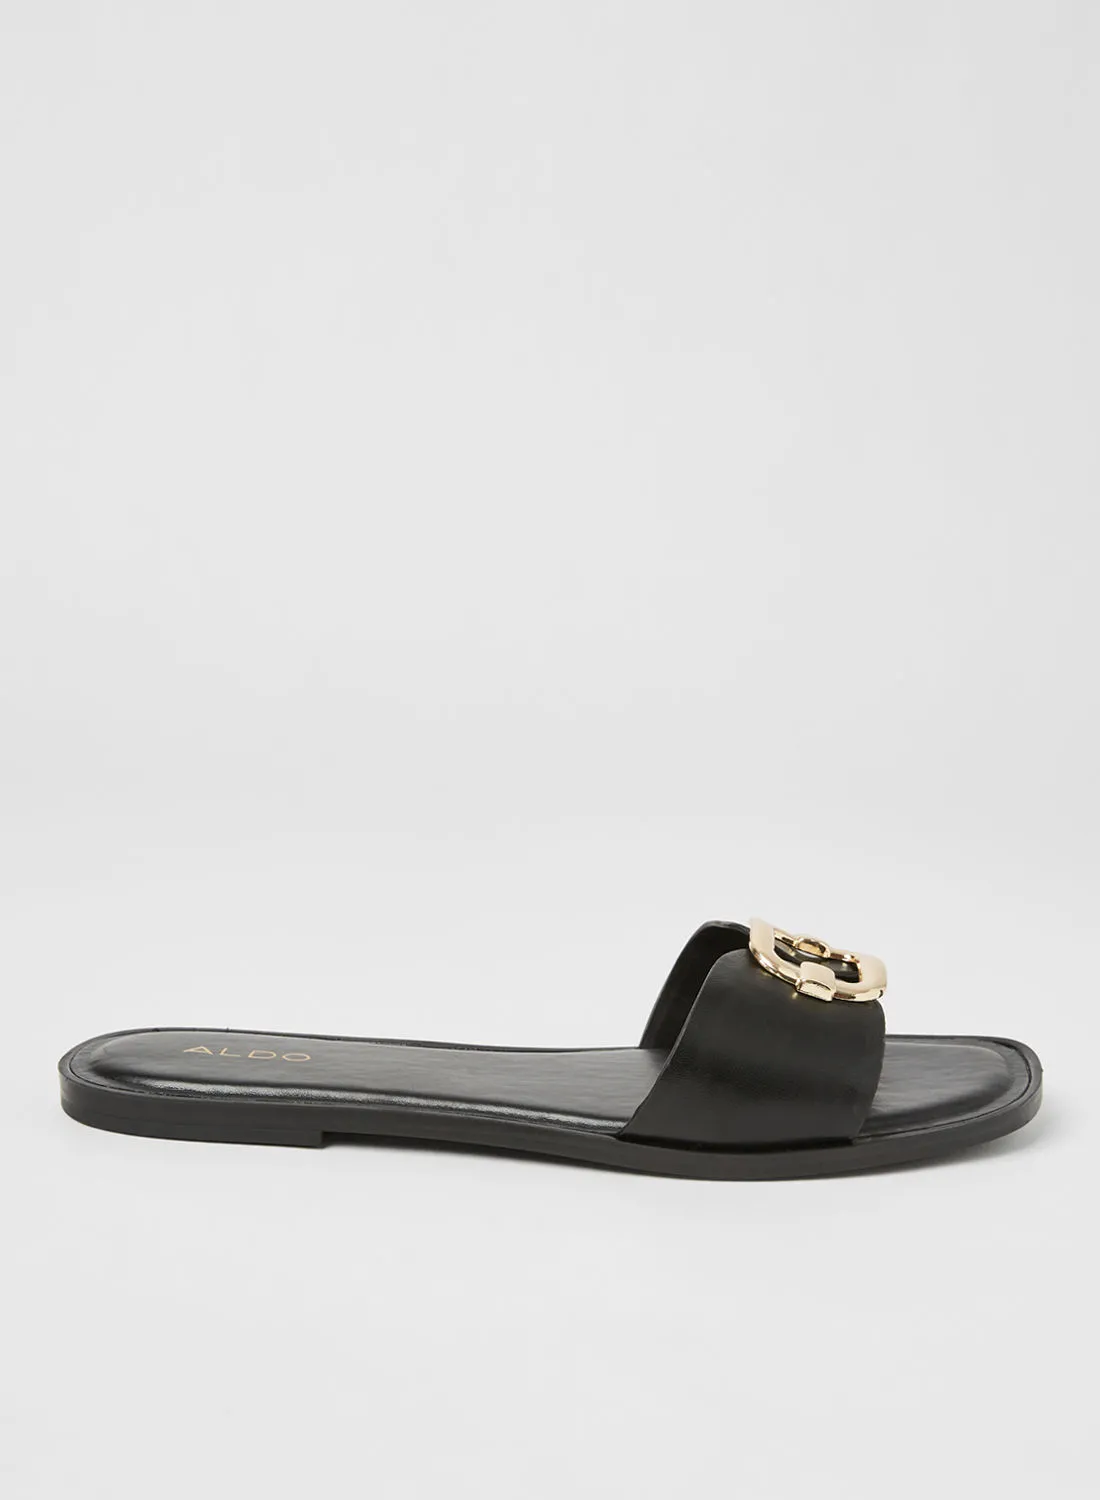 ALDO Glaeswen Flat Sandals Black/Golden